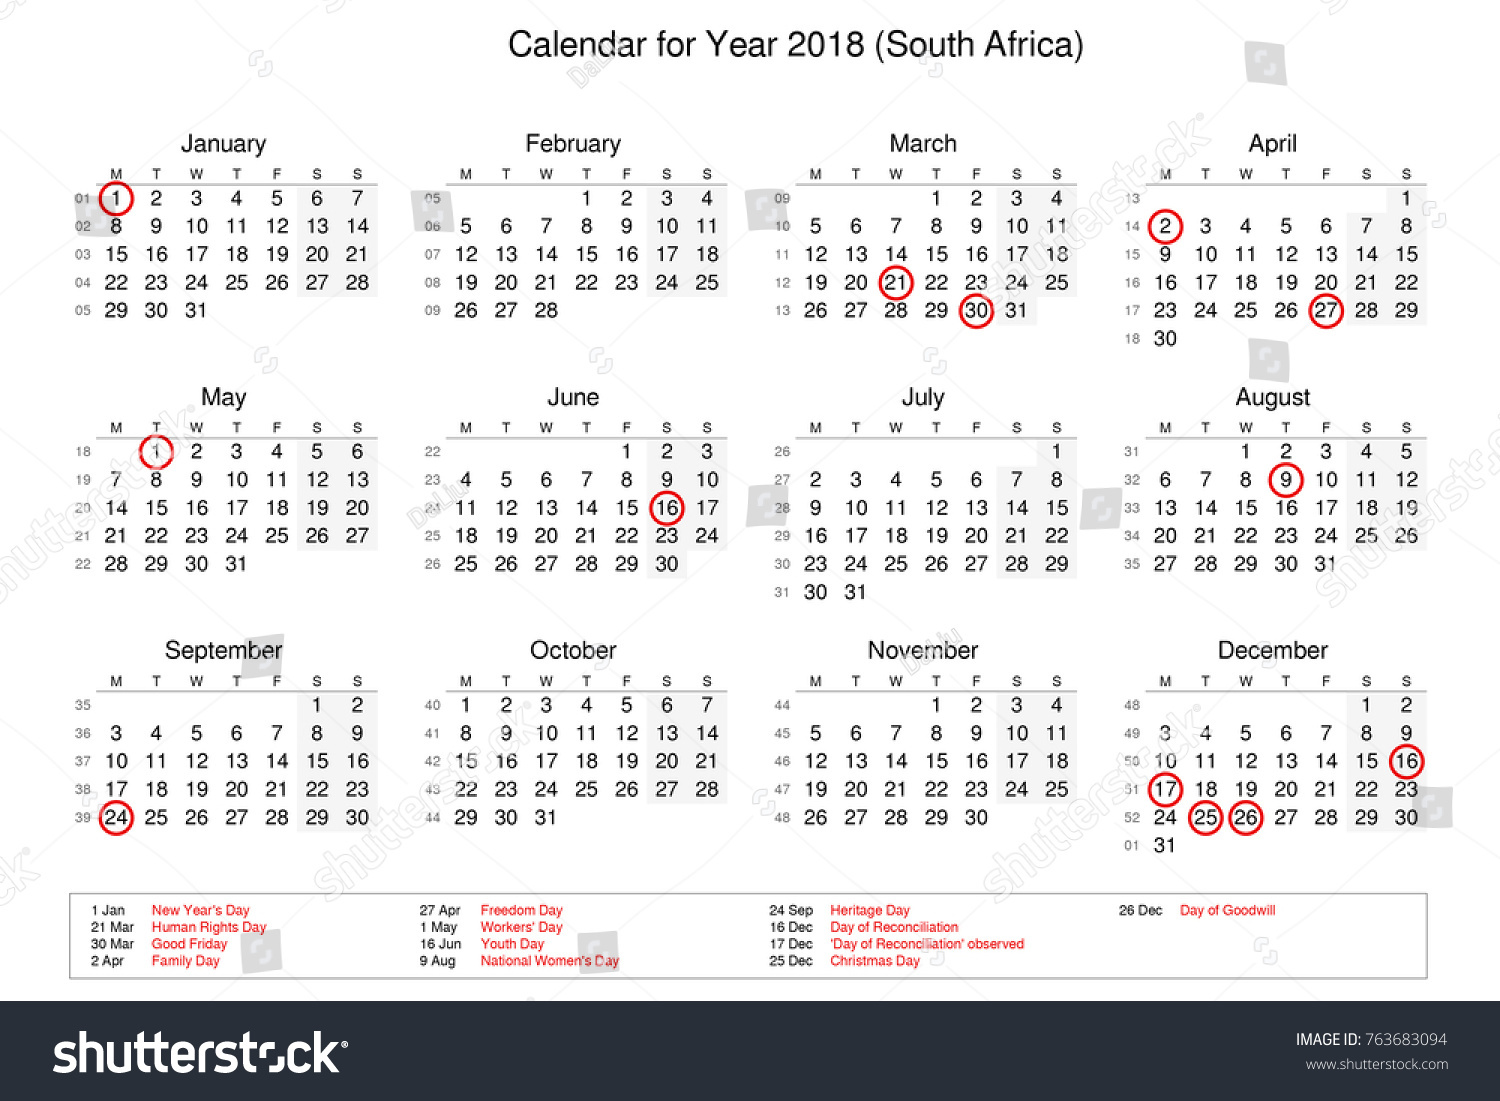 calendar-year-2018-public-holidays-bank-stock-illustration-763683094